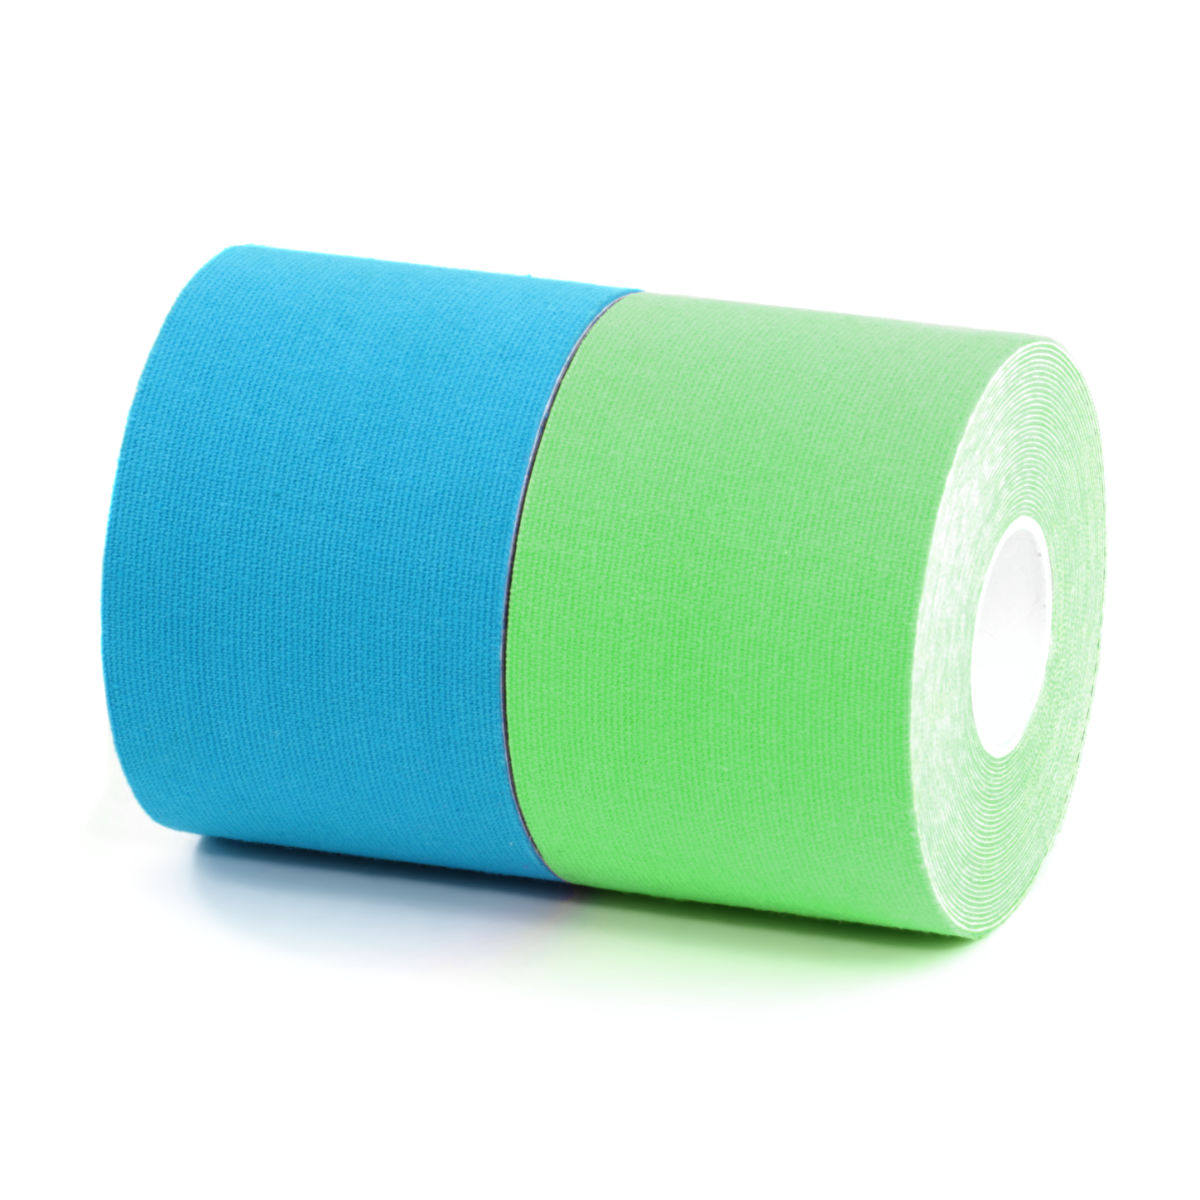 BRONVIT Sport Kinesio Tape set 2 x 5cm x 6m modrá + zelená